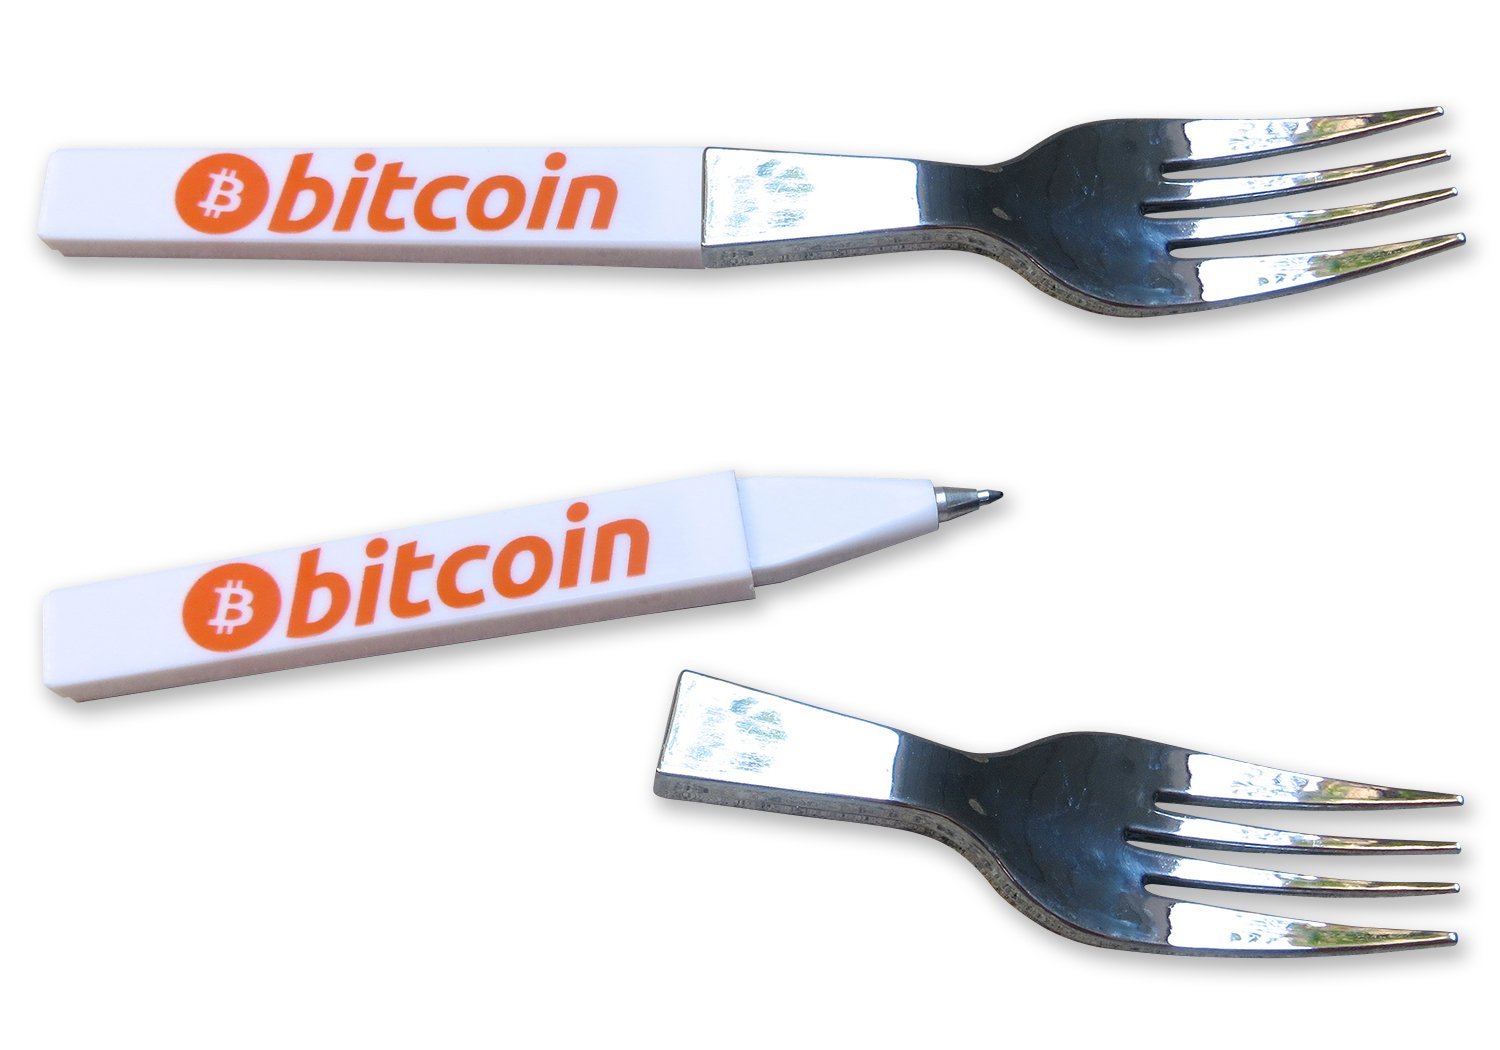 Bitcoin-Fork-Pen.jpg